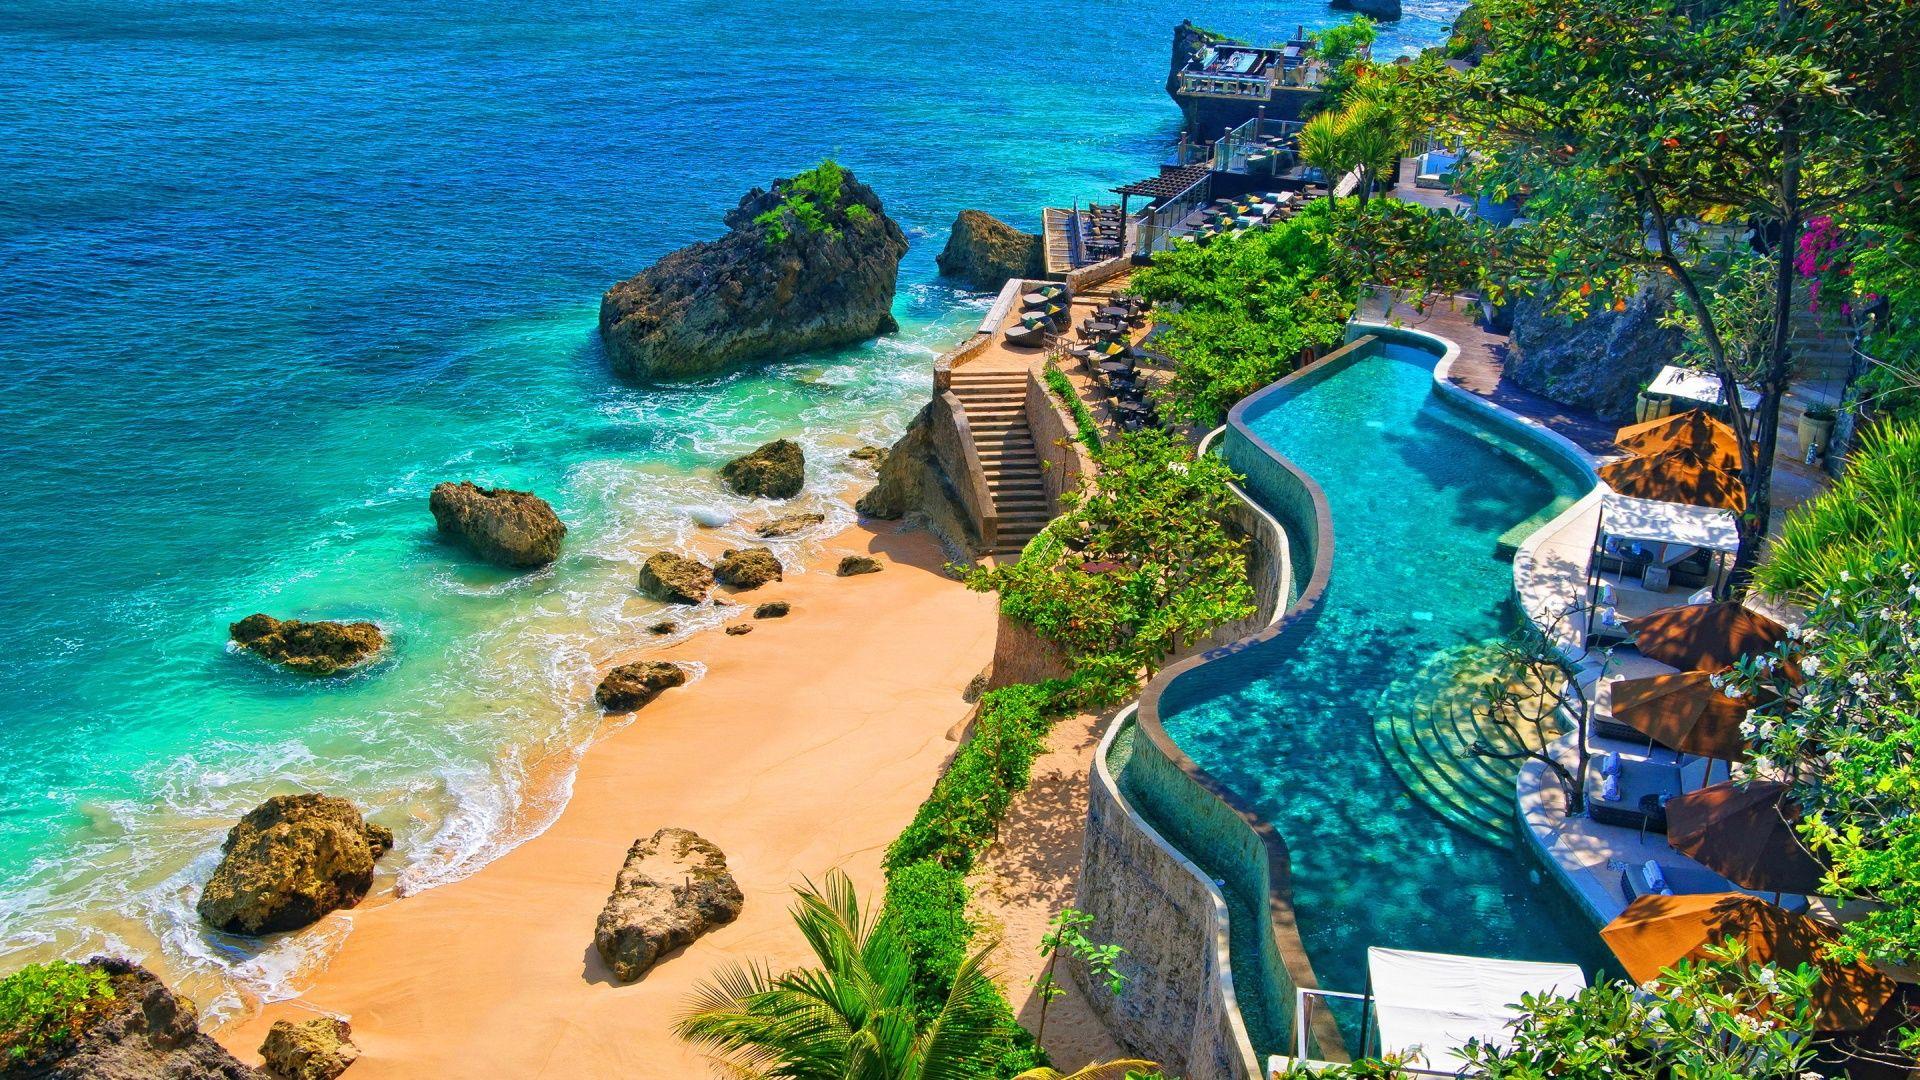 Stunning Bali Resort Wallpaper 45862 1920x1080 px